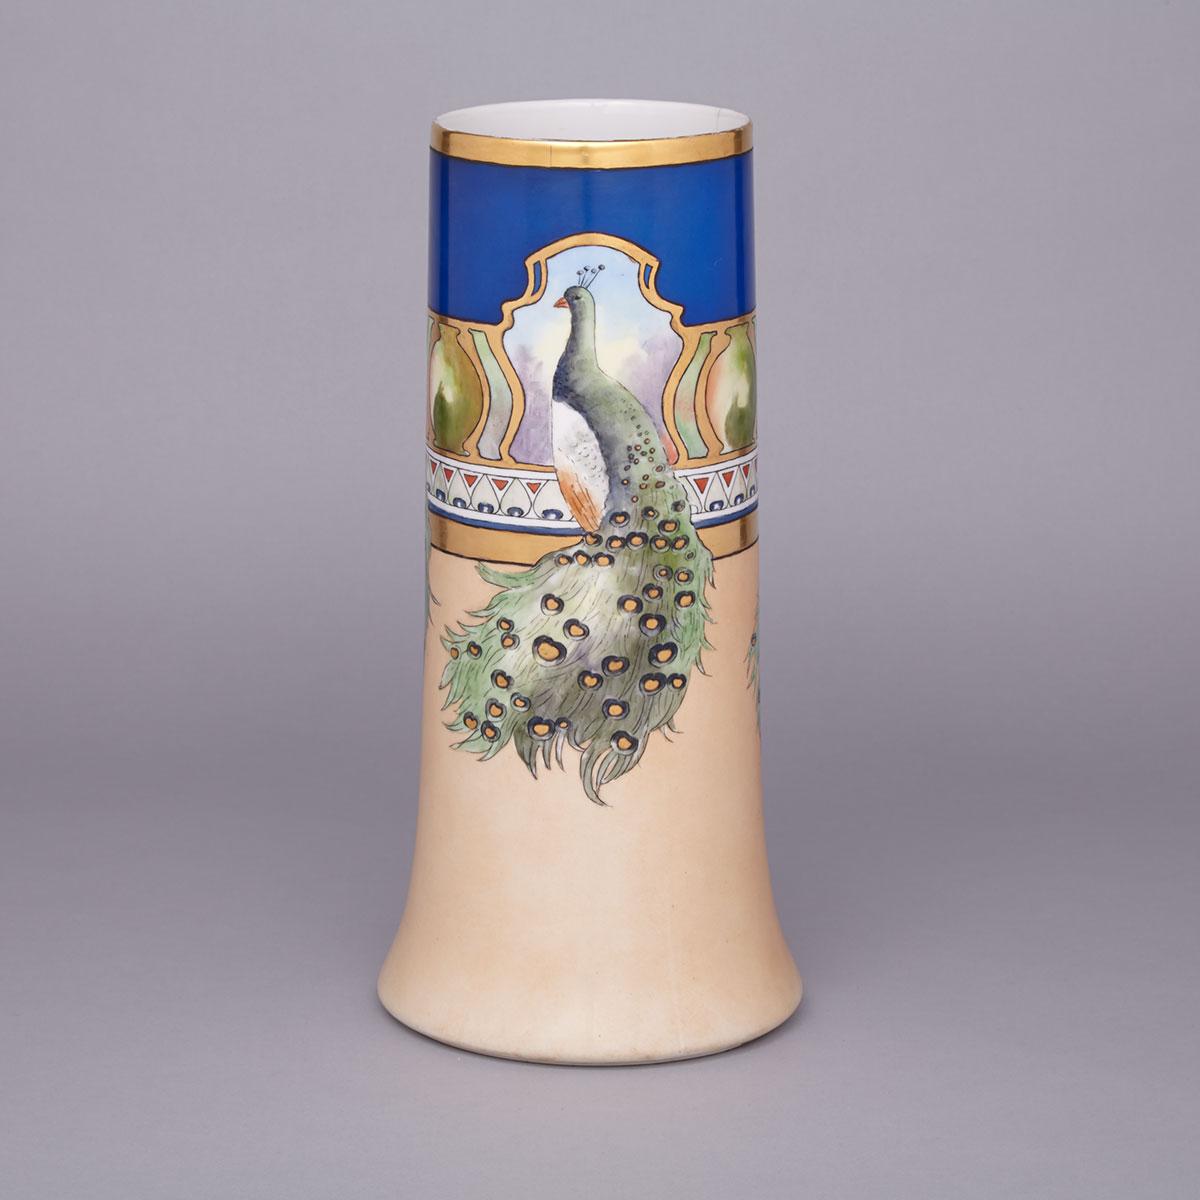 North American Decorated Bernardaud Limoges Vase, dated 1931